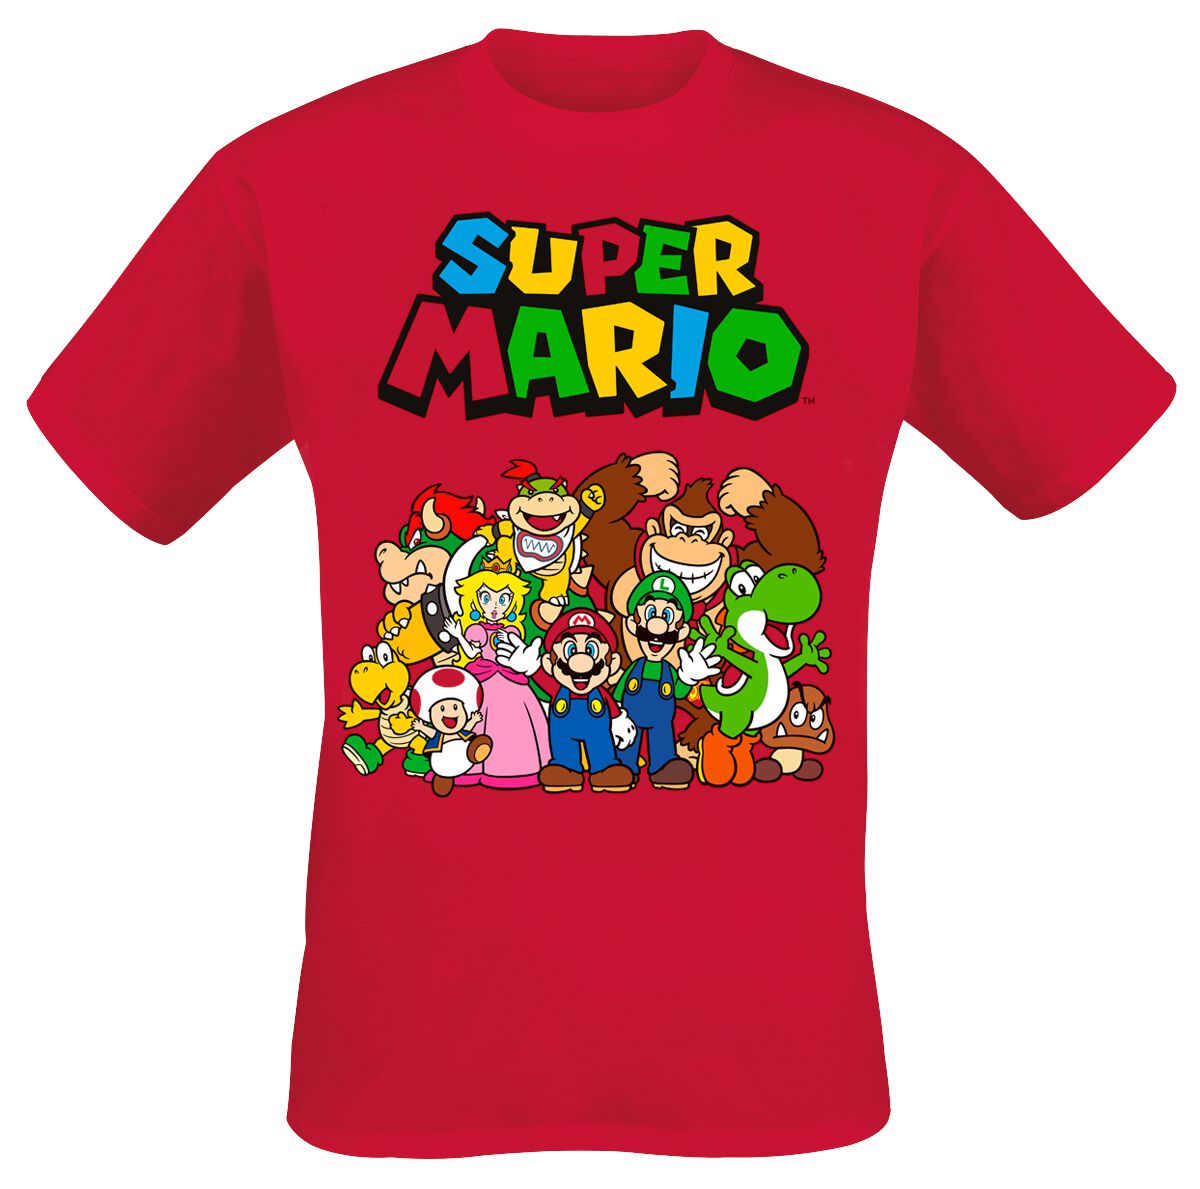 Super Mario Group Shot T-Shirt rot in XXL